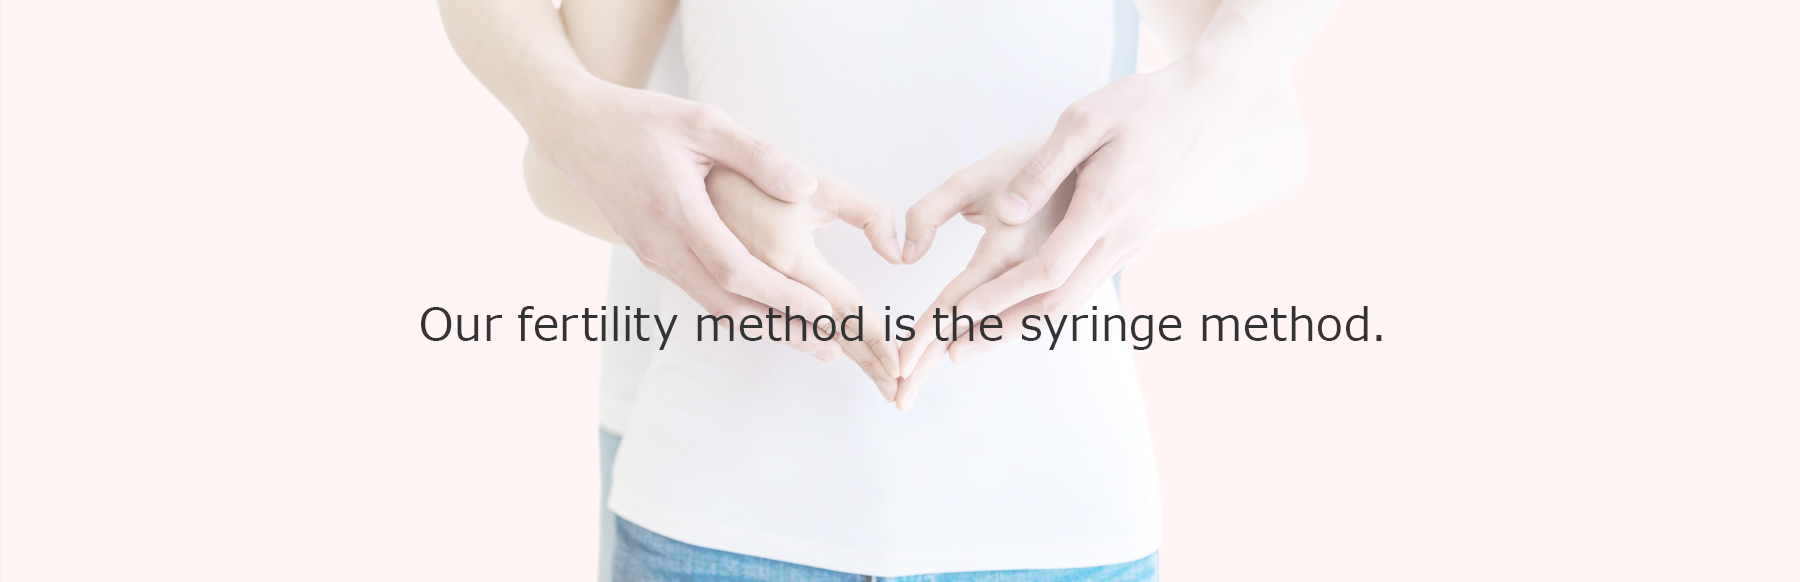 Our fertility method is the syringe method.